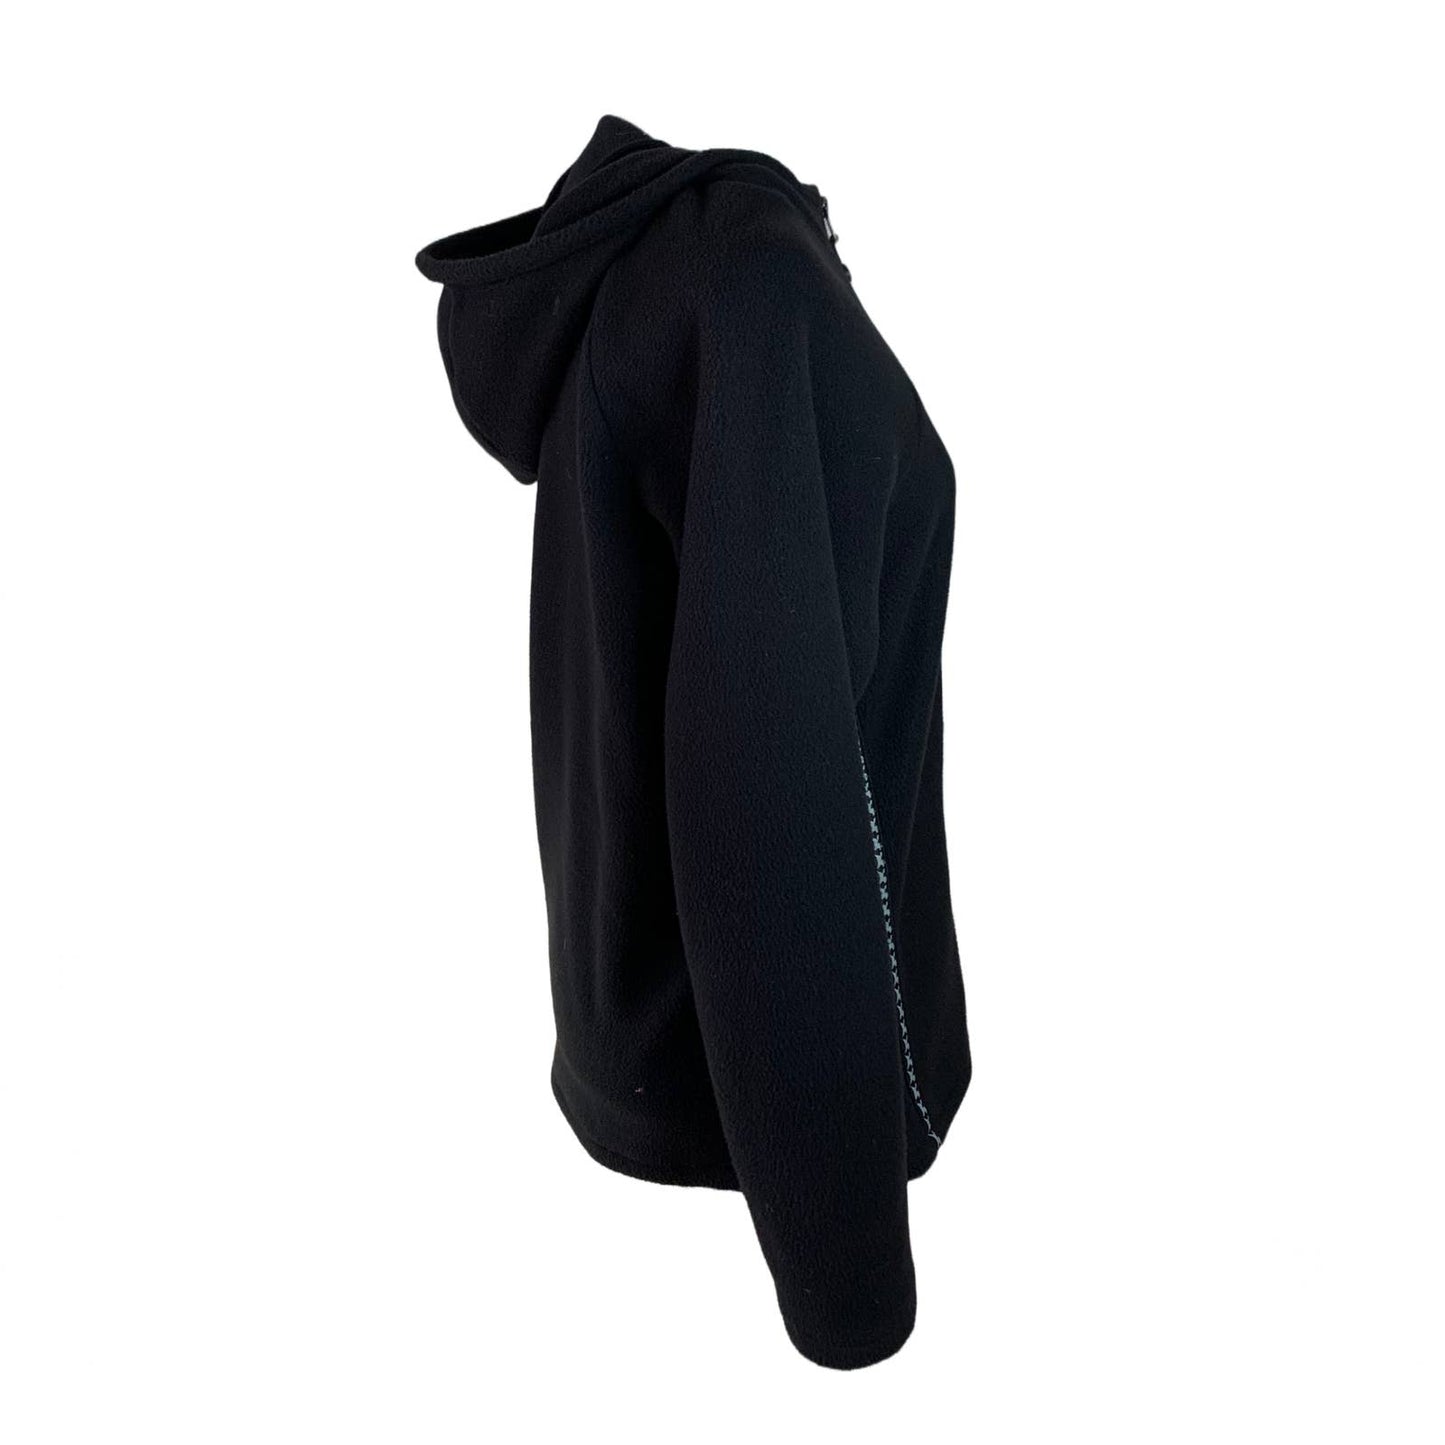 Kerrits Fleece Jacket in Black - Woman's Medium